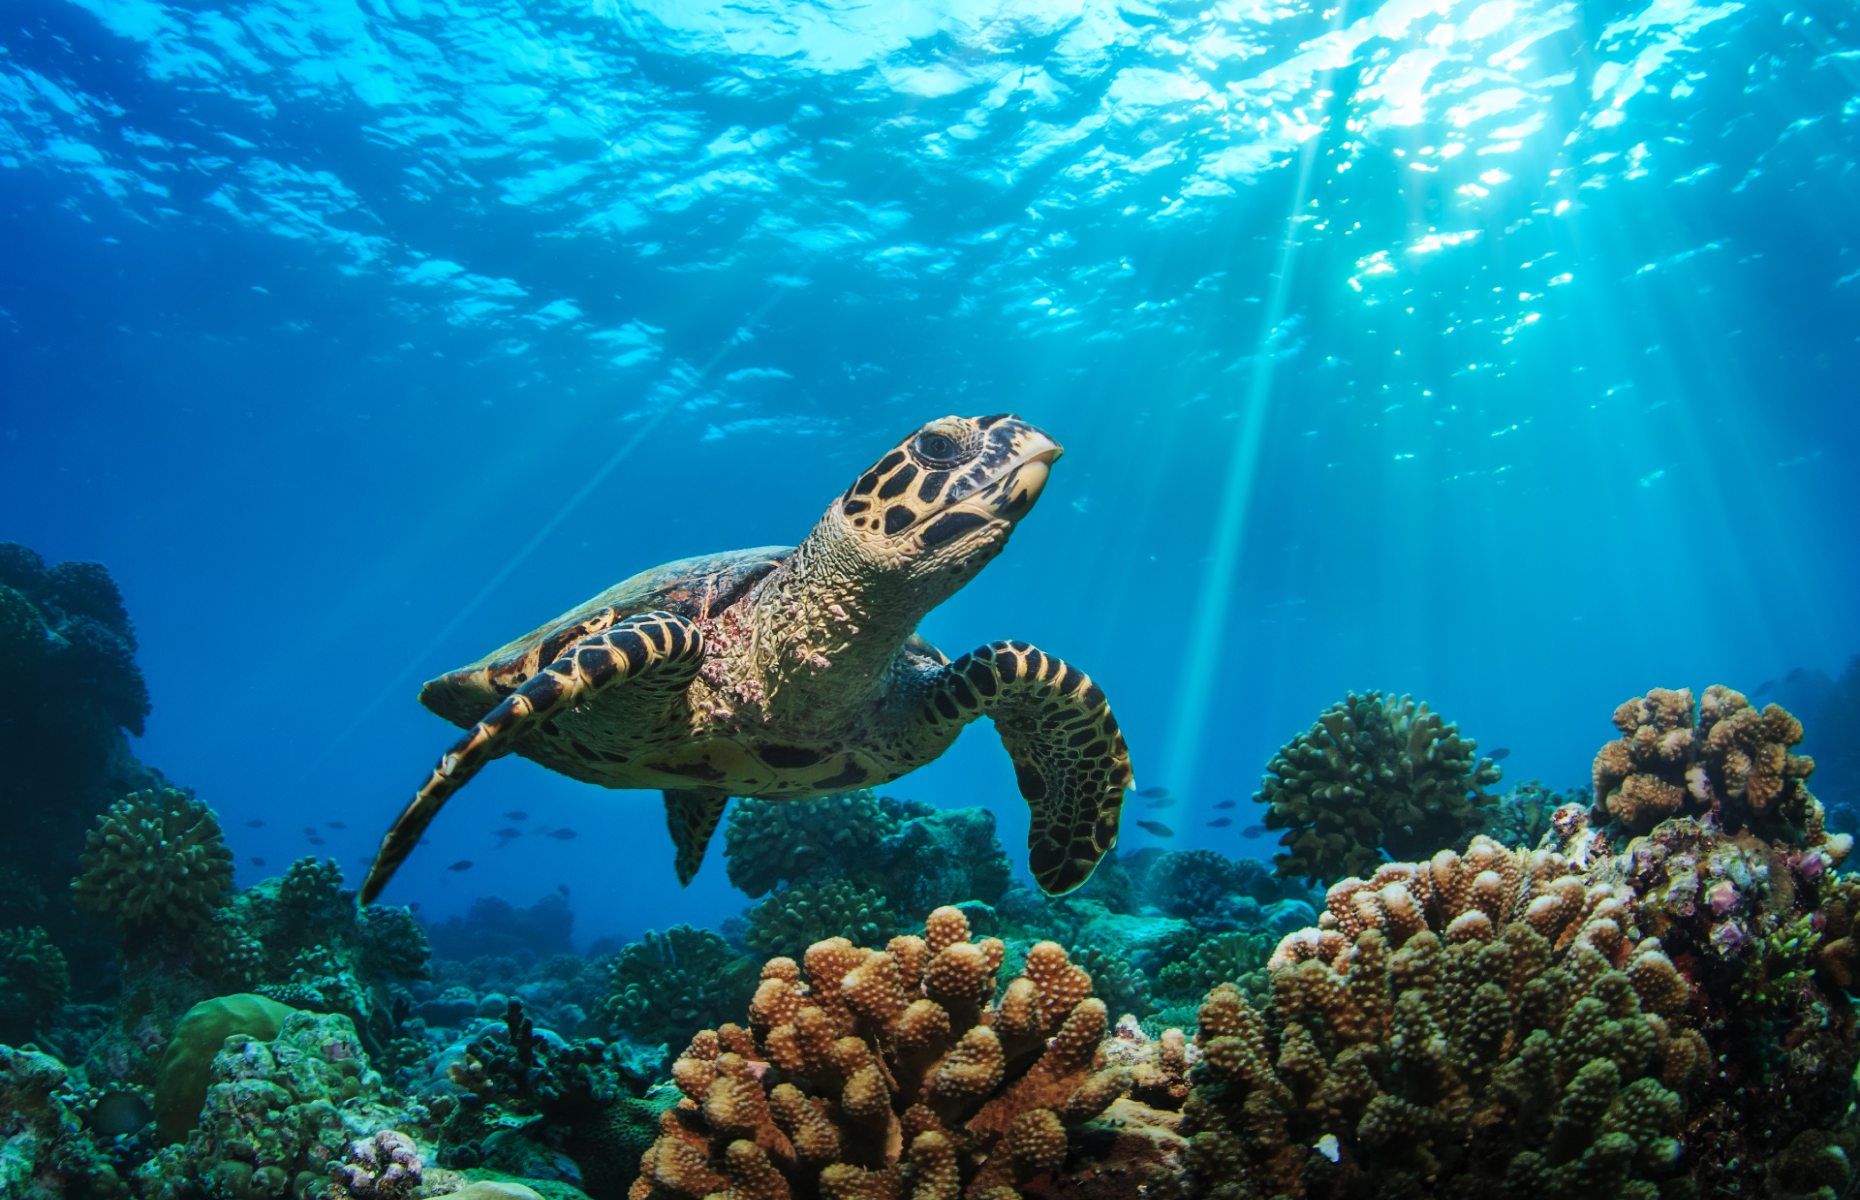 The Maldives' coral reefs [Image: Willyam Bradberry/Shutterstock]